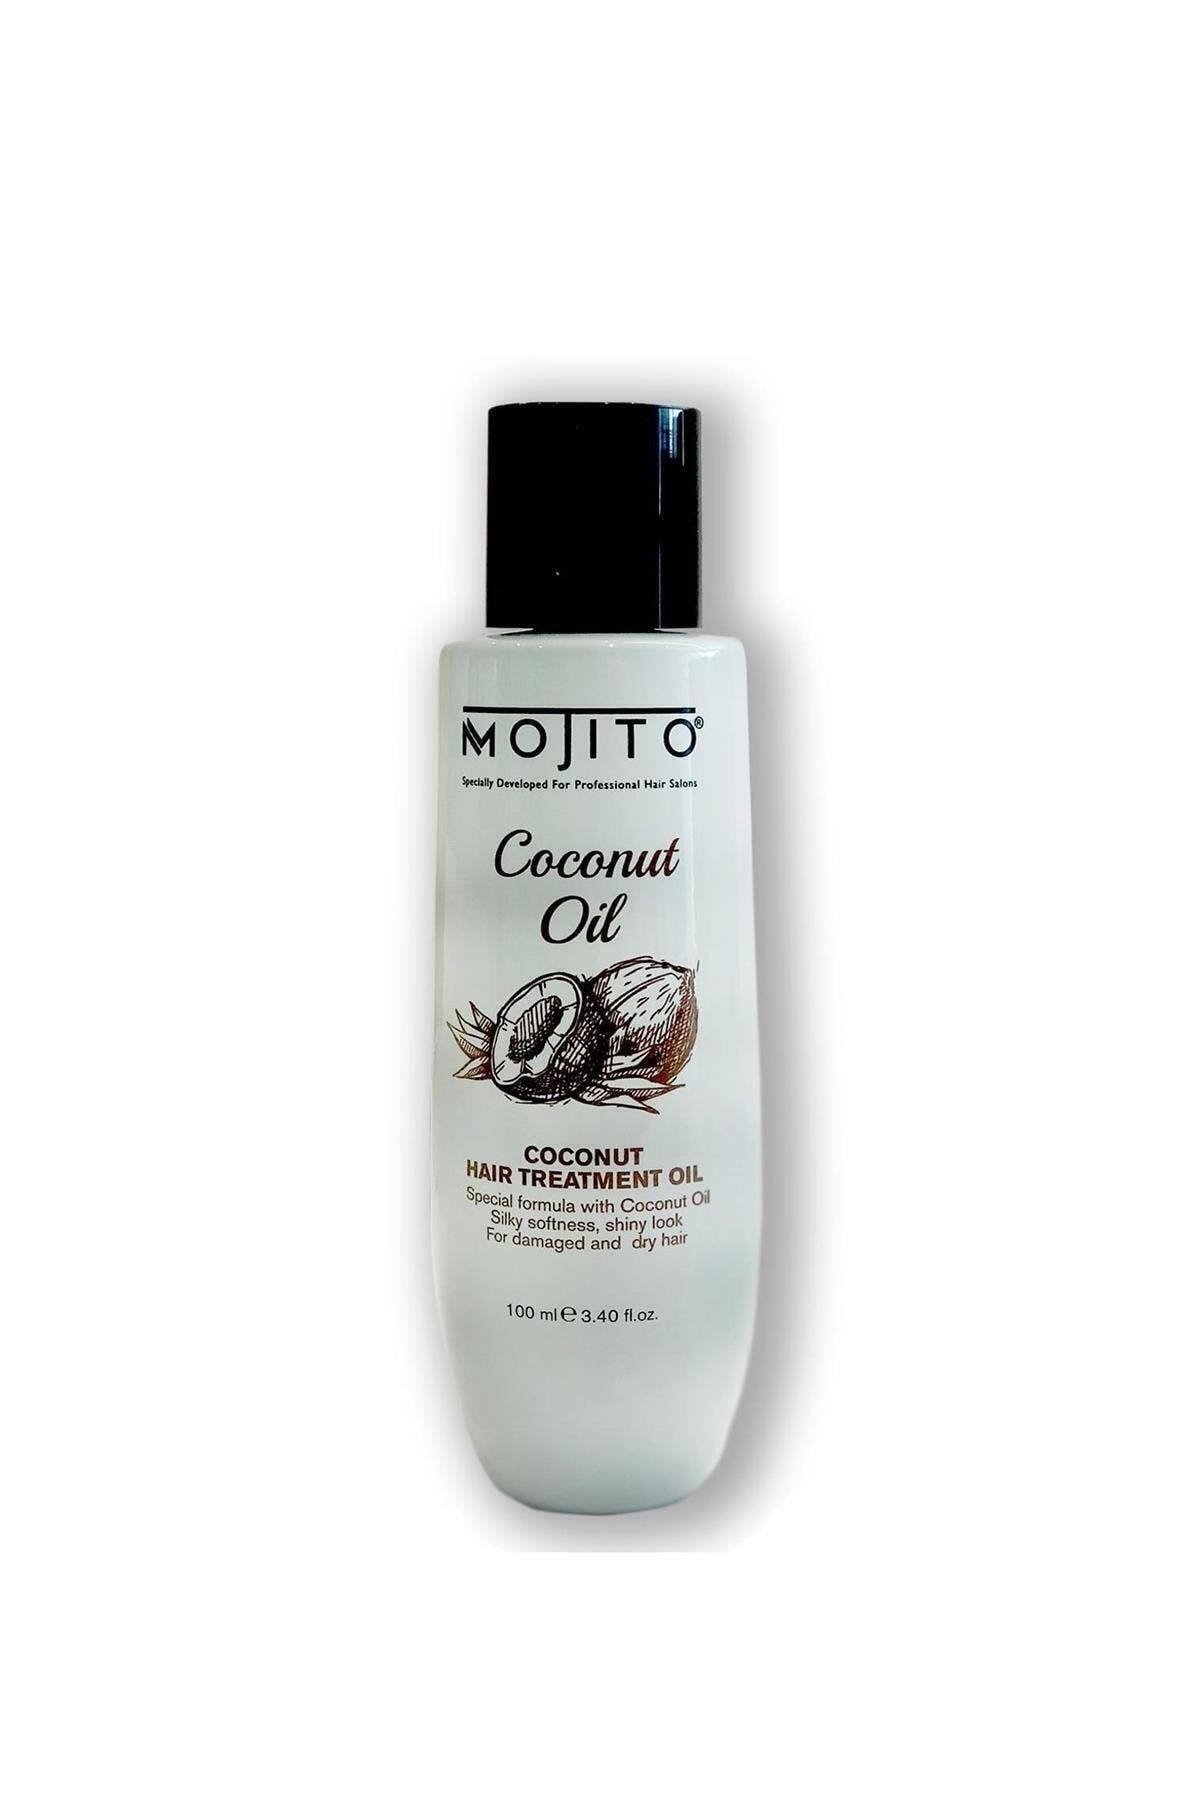 Mojito Hindistan Cevizi Saç Bakım Yağı 100 ml